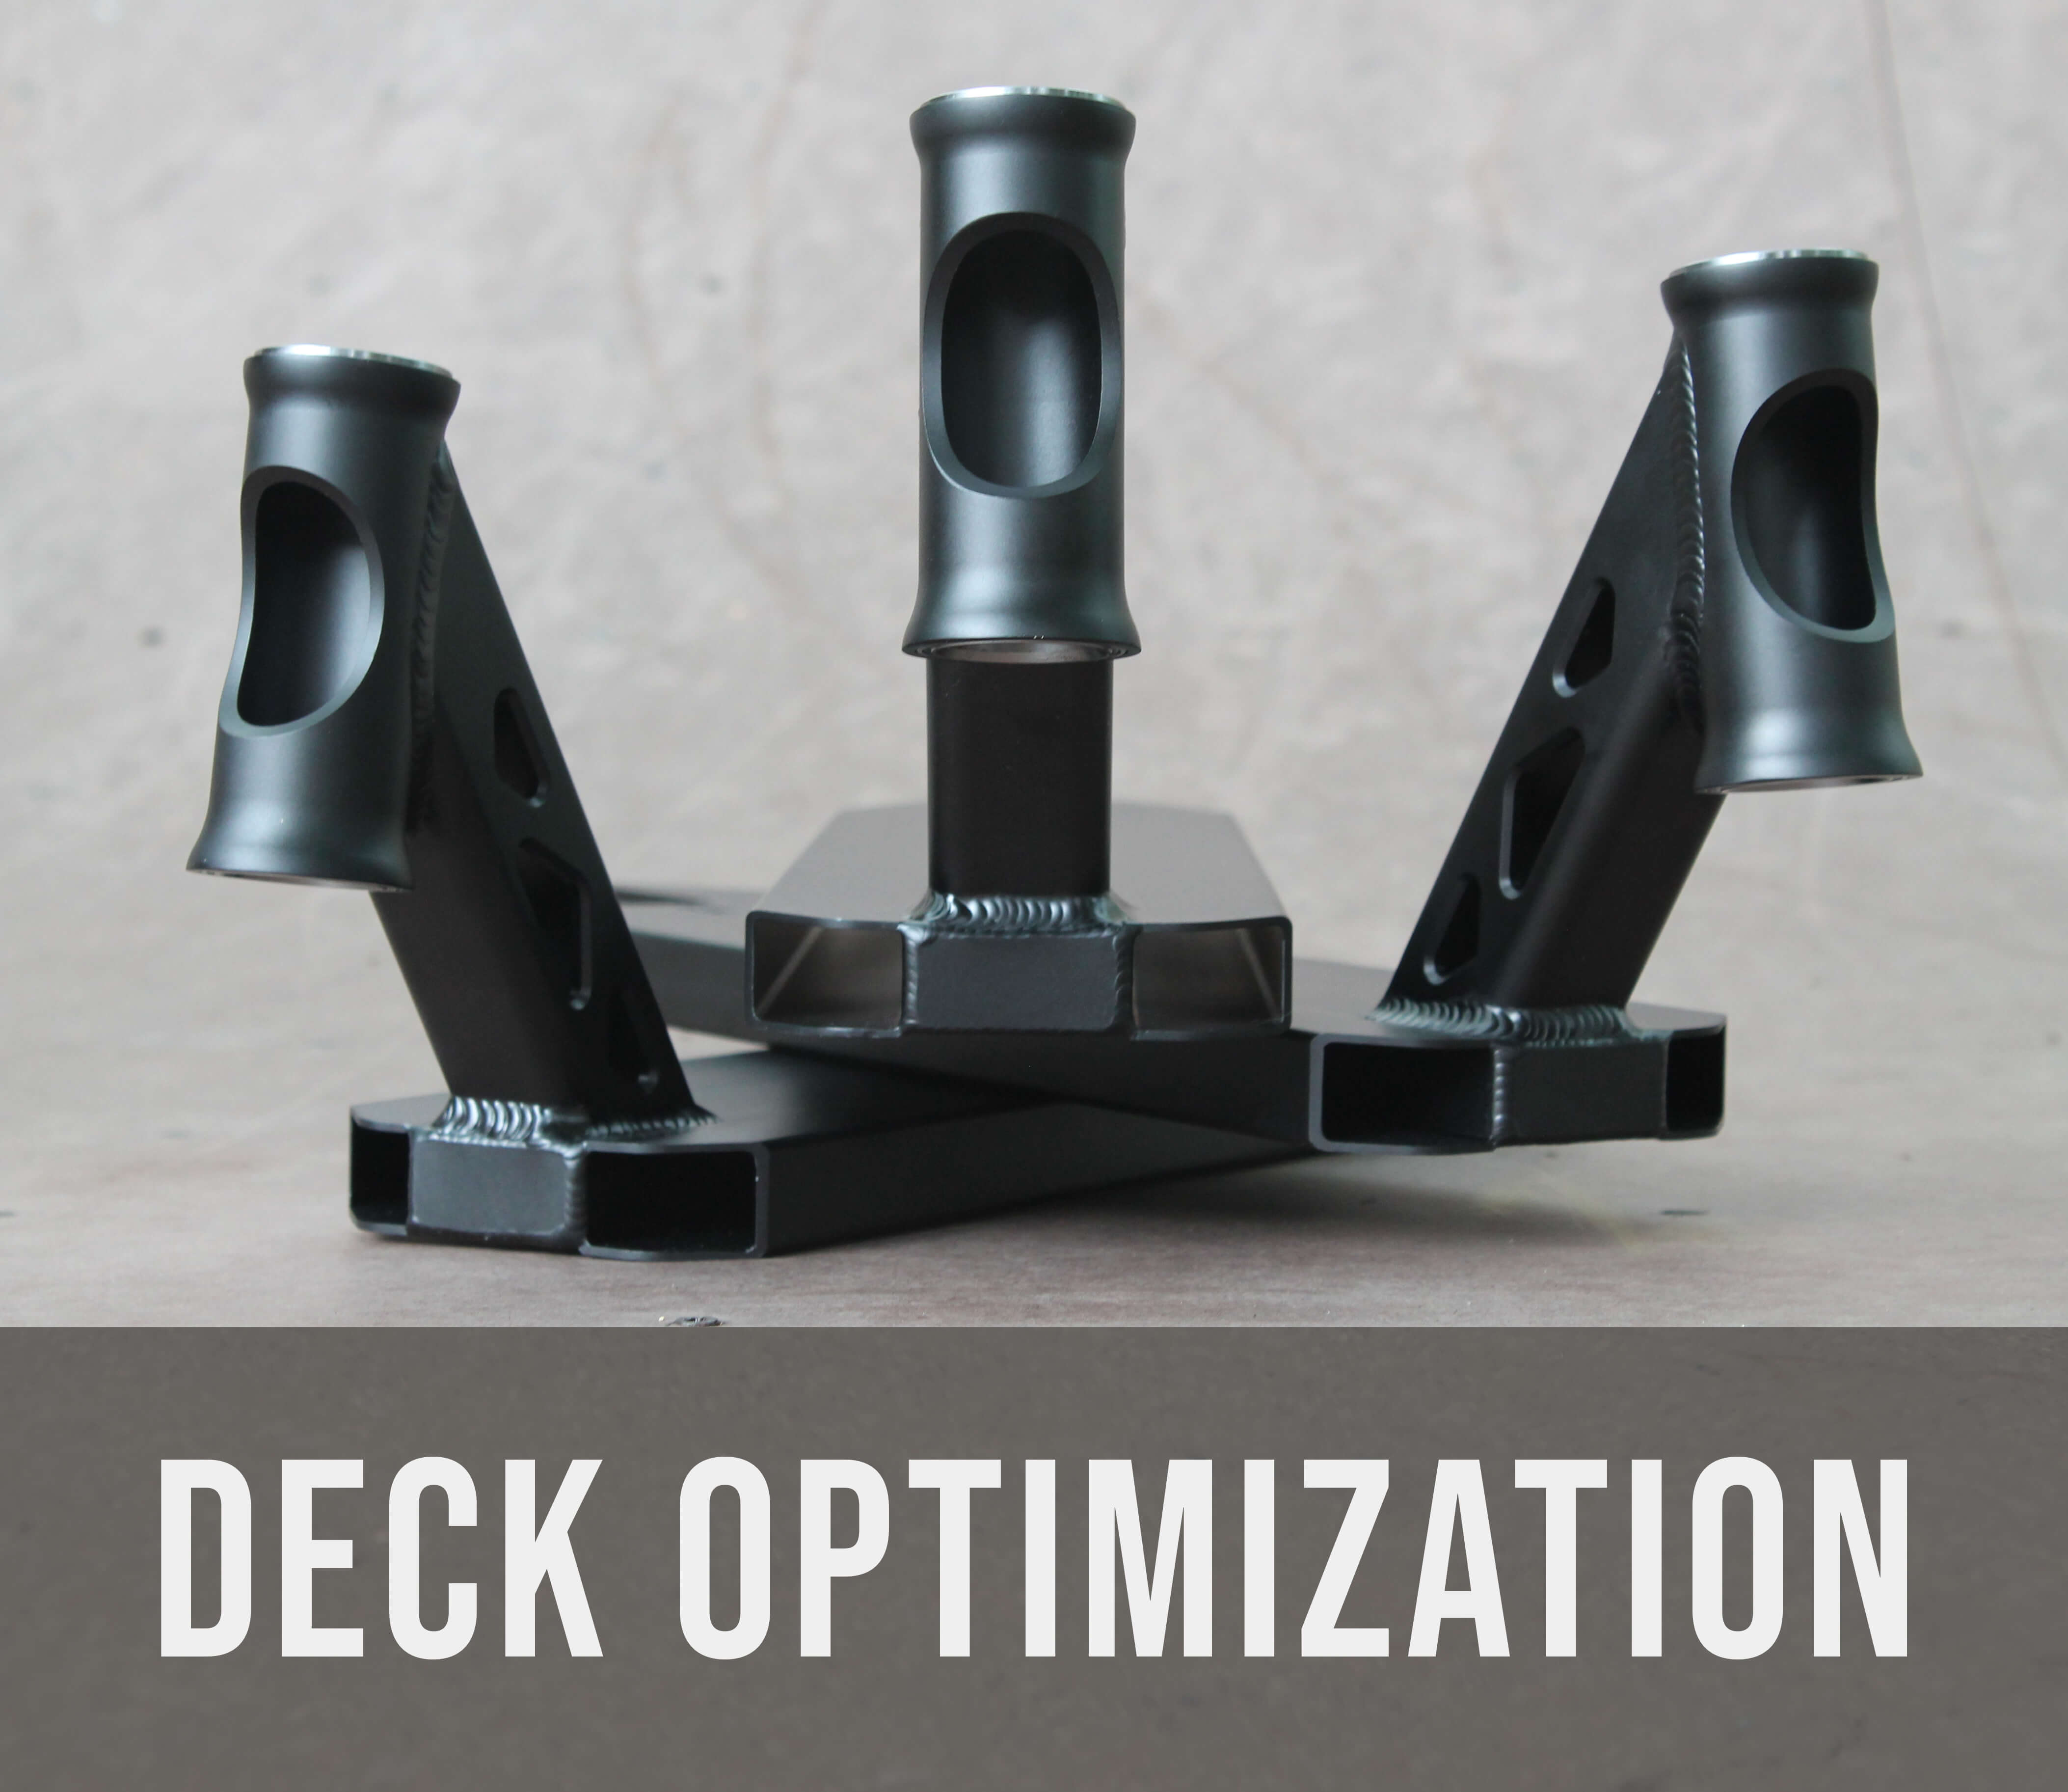 Deck Optimization